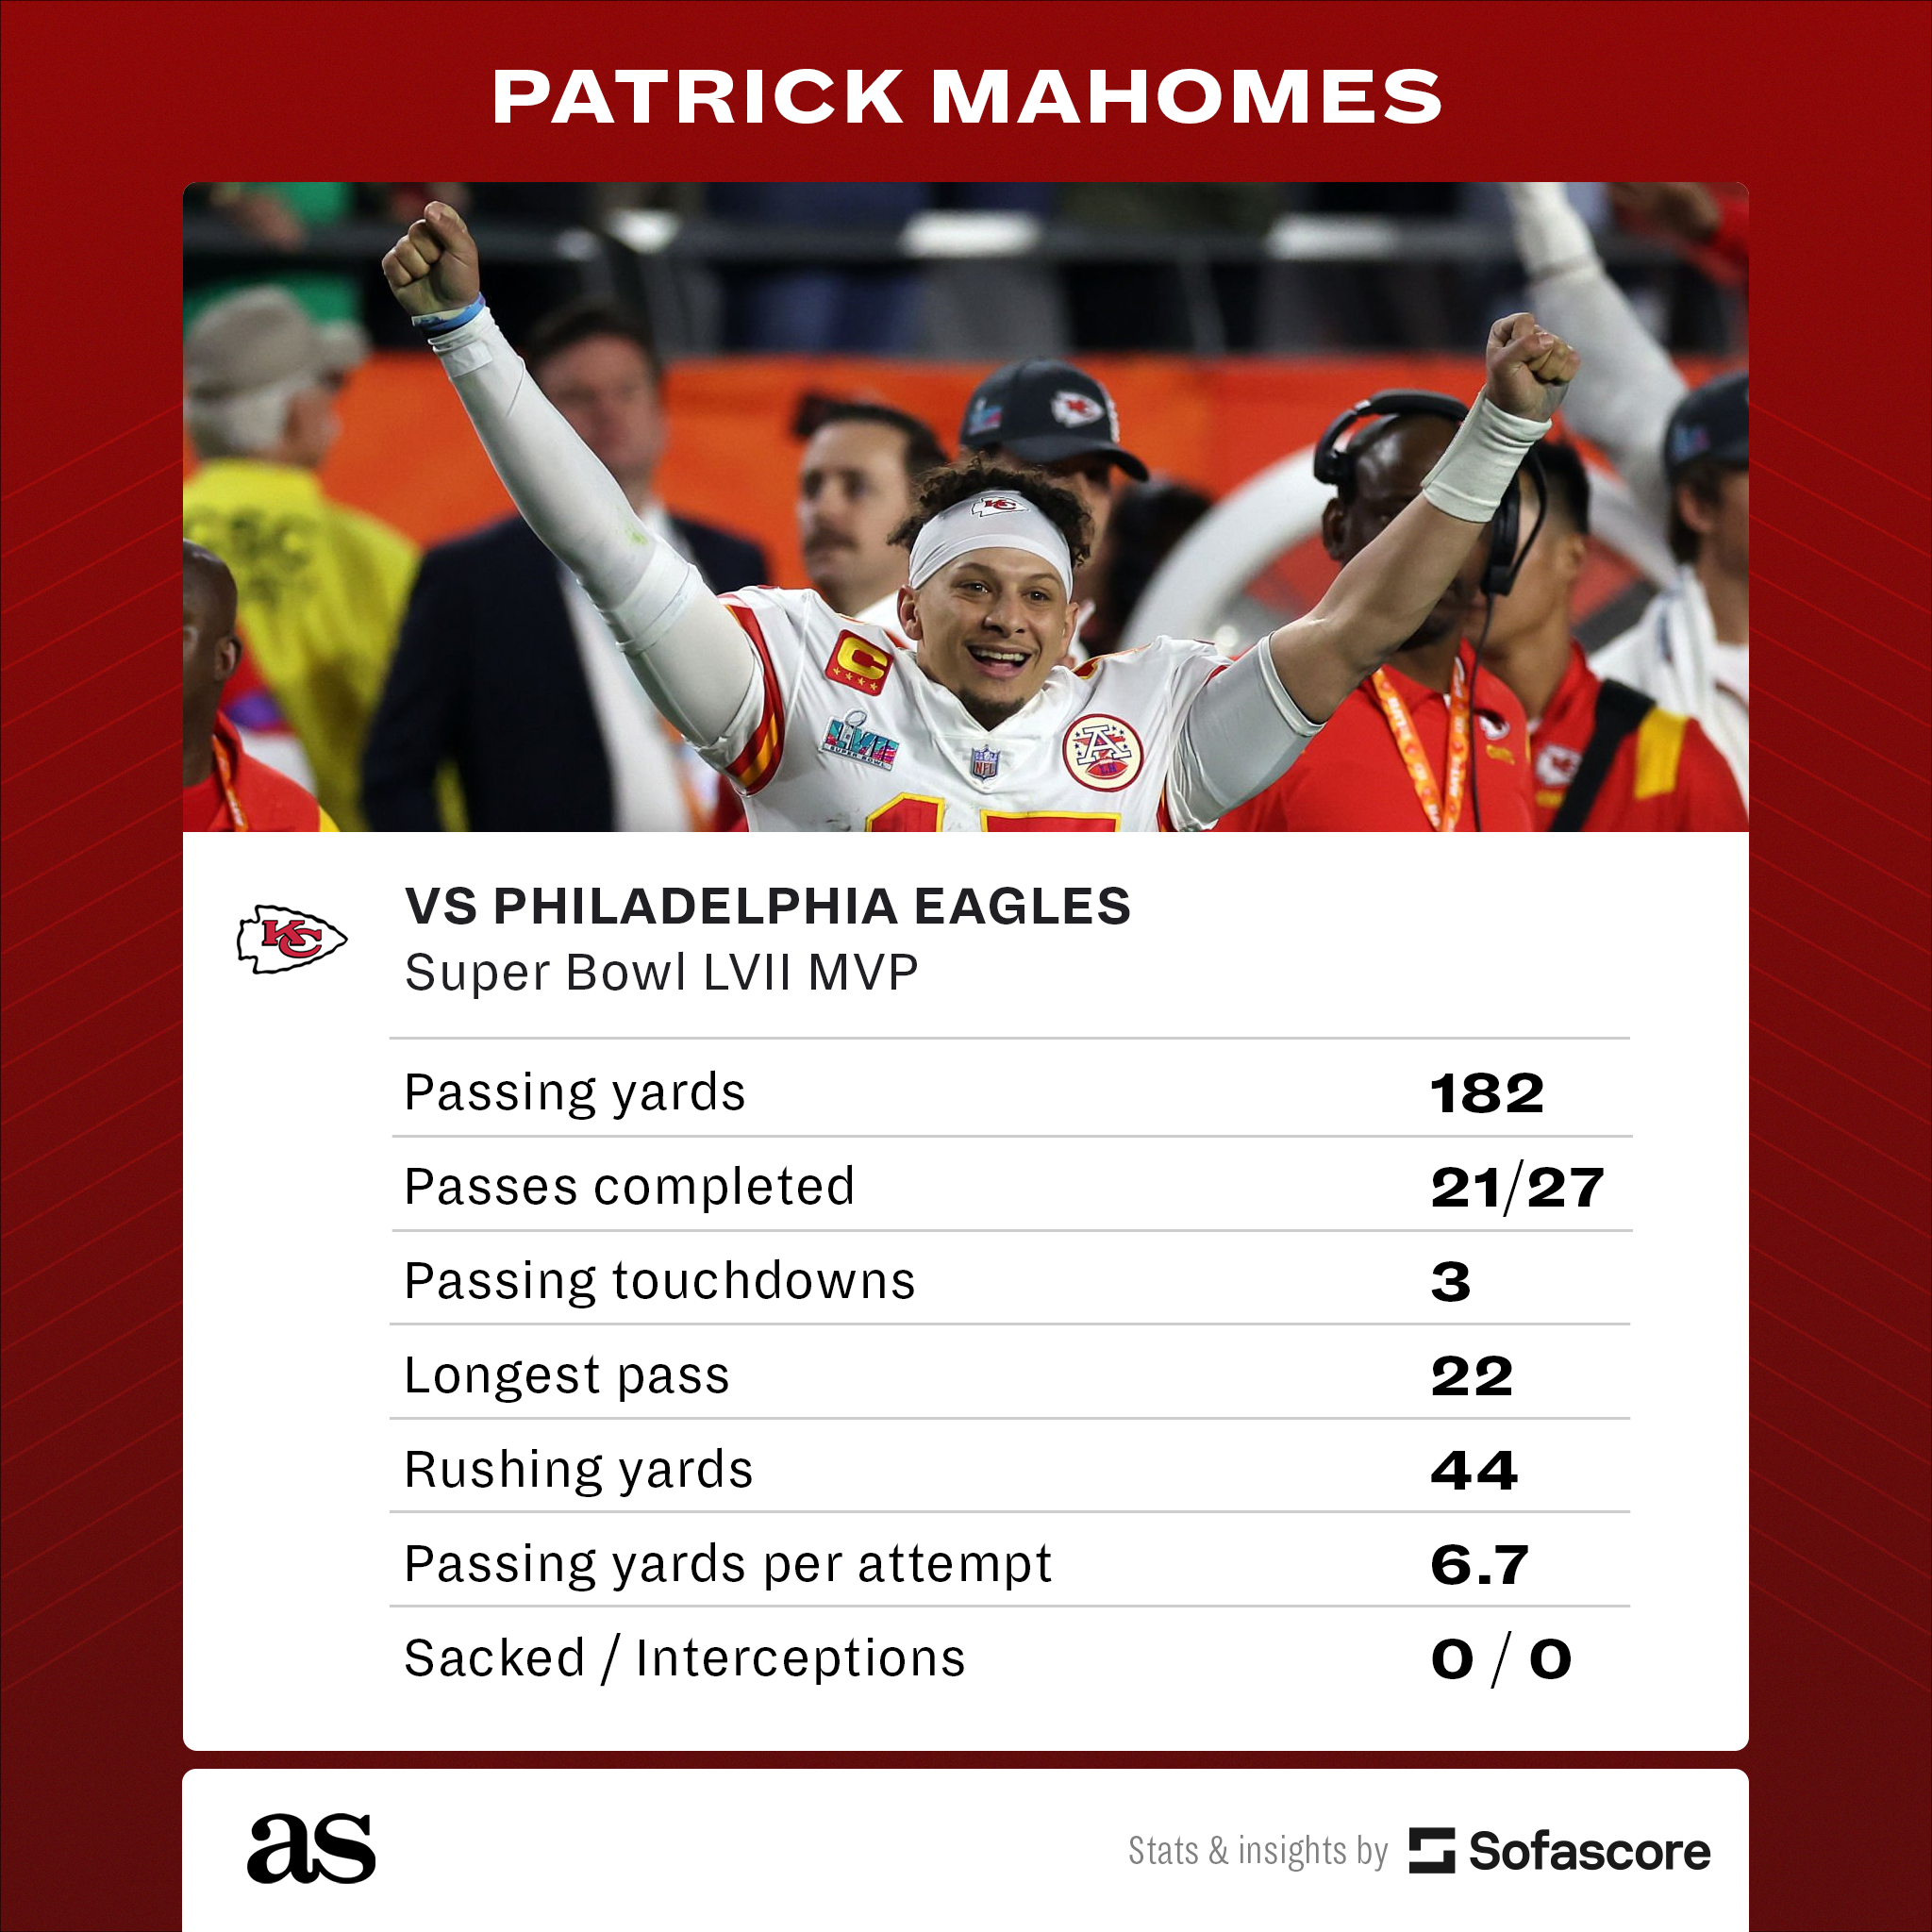 Patrick Mahomes - Biography, 2x Super Bowl MVP, NFL Quarterback